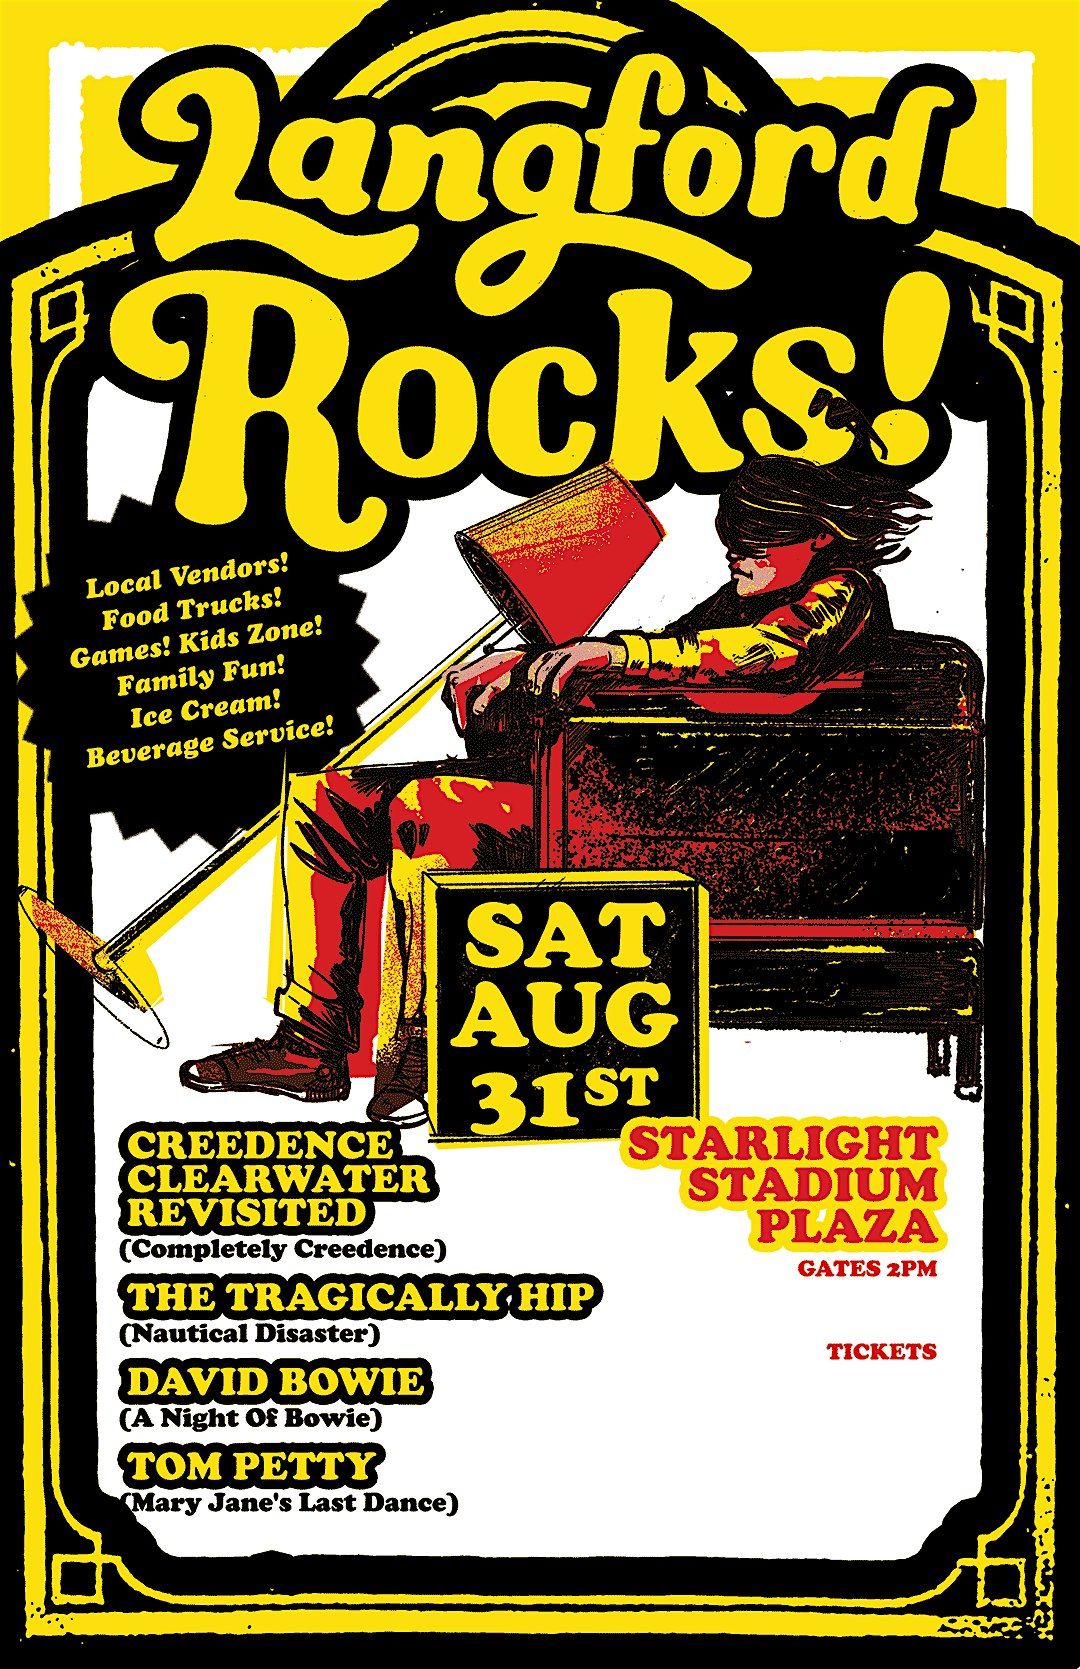 LANGFORD ROCKS!  - Classic Rock Weekend